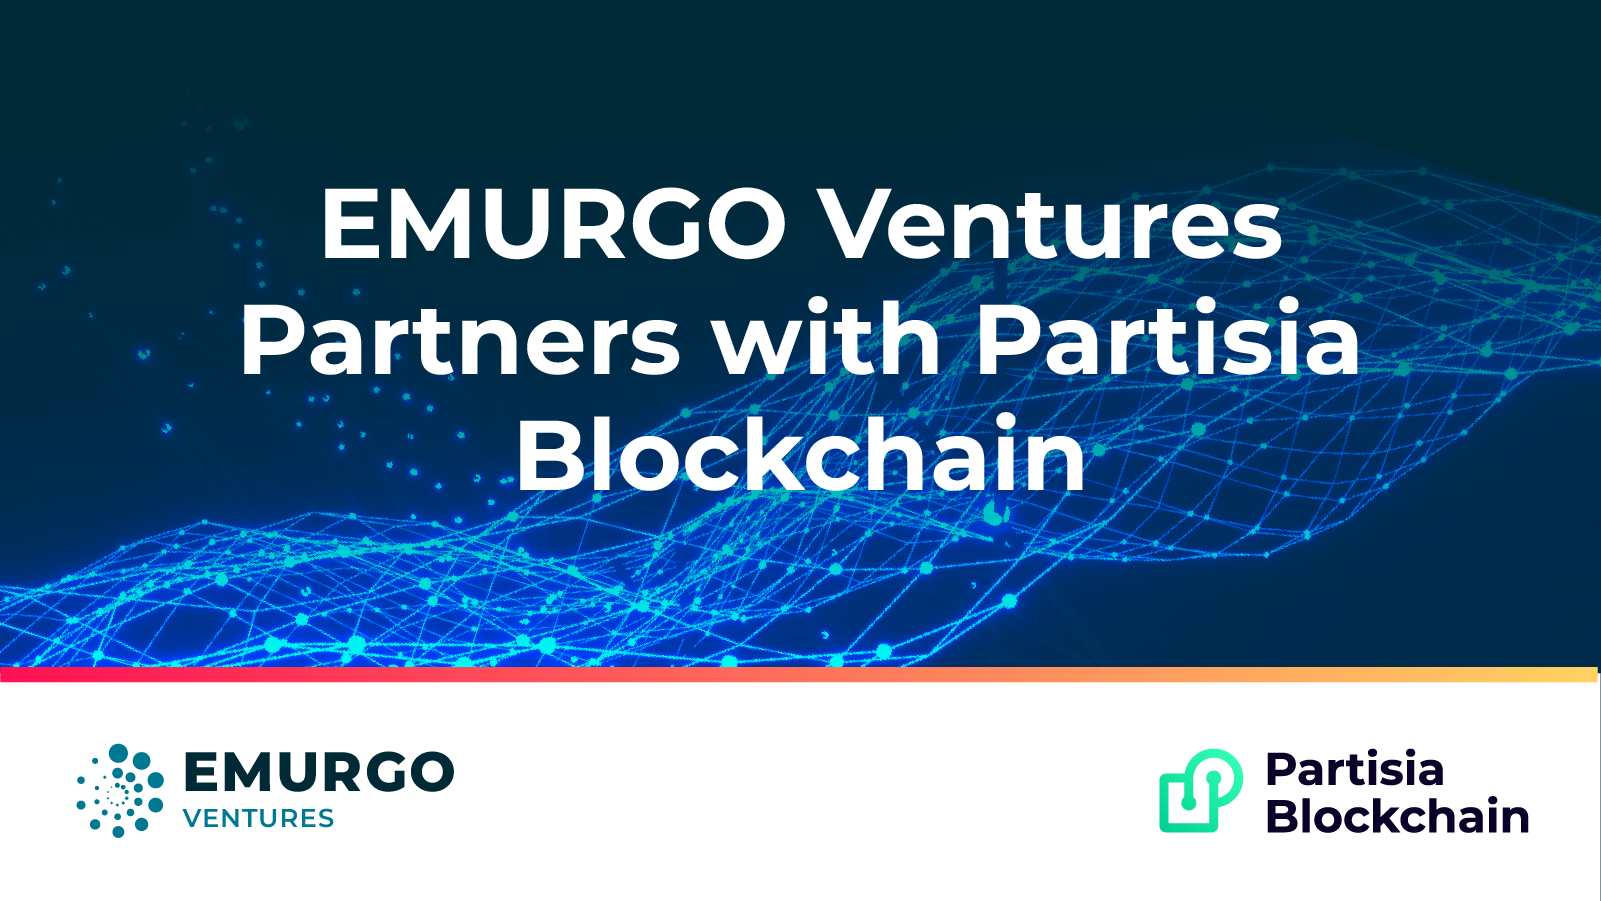 EMURGO-Ventures-Partnership-Partisia-Blockchain-Cardano-Privacy-Features-41.png